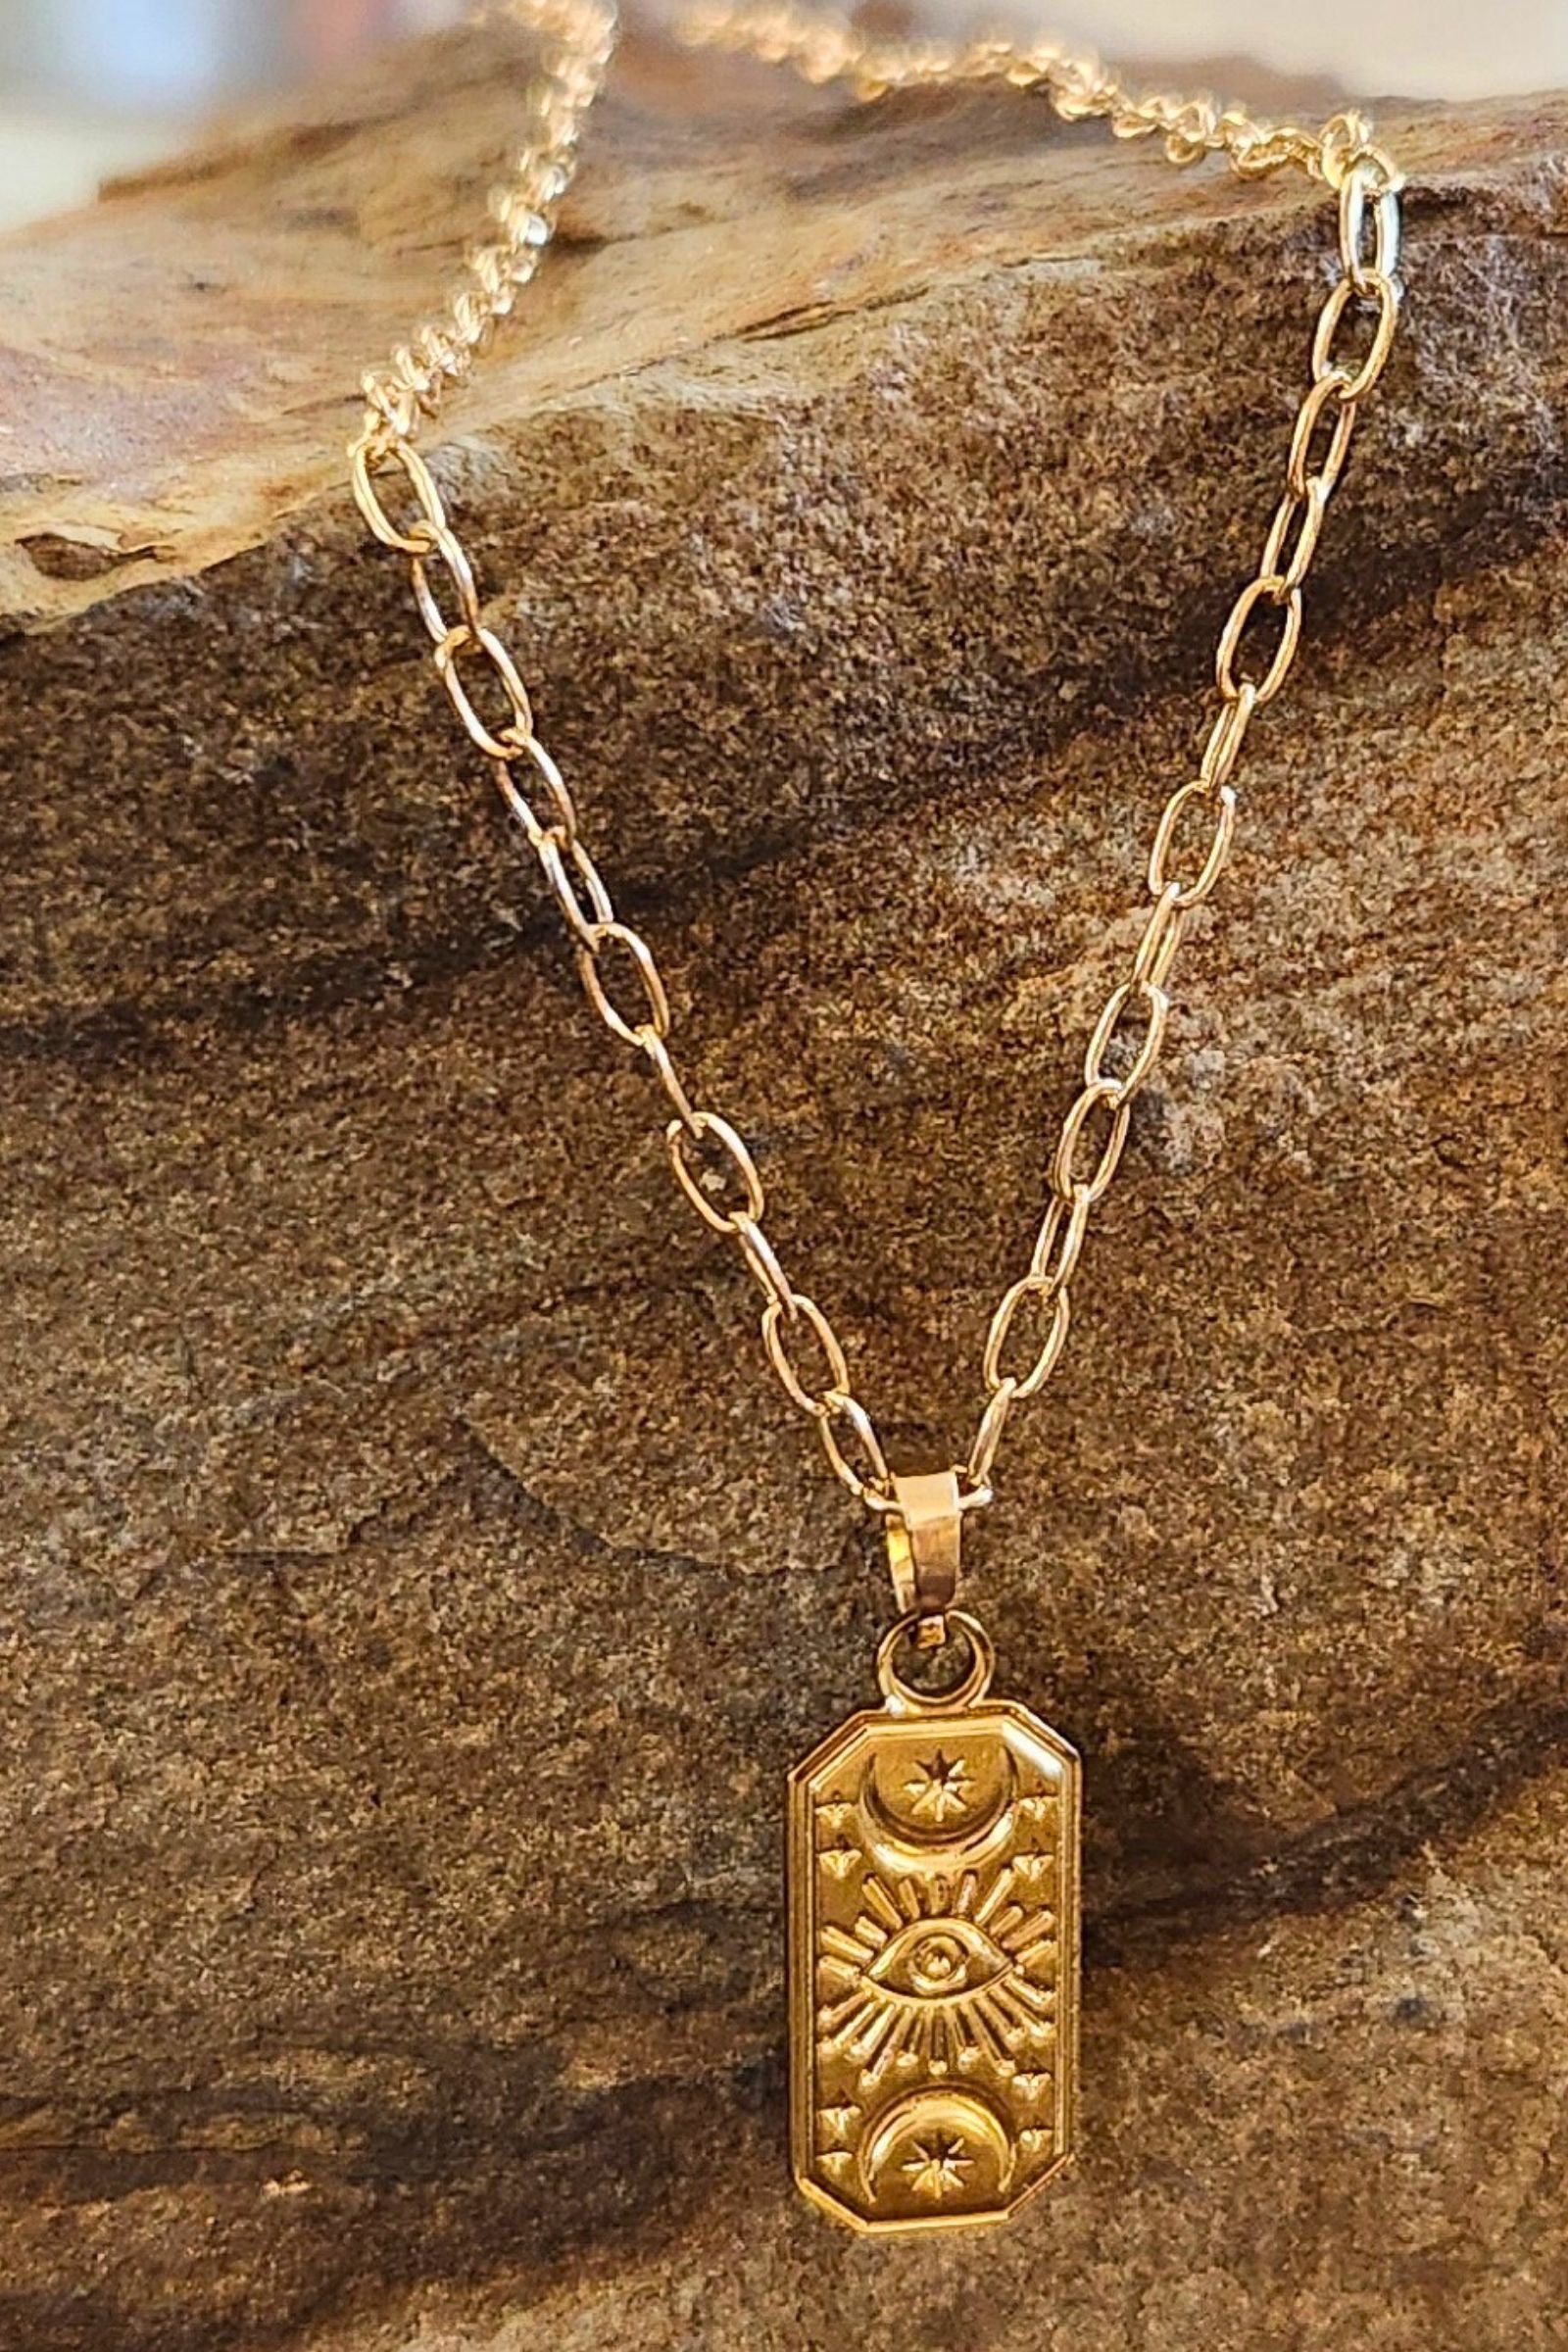 Celestial Gaze Gold Pendant Necklace